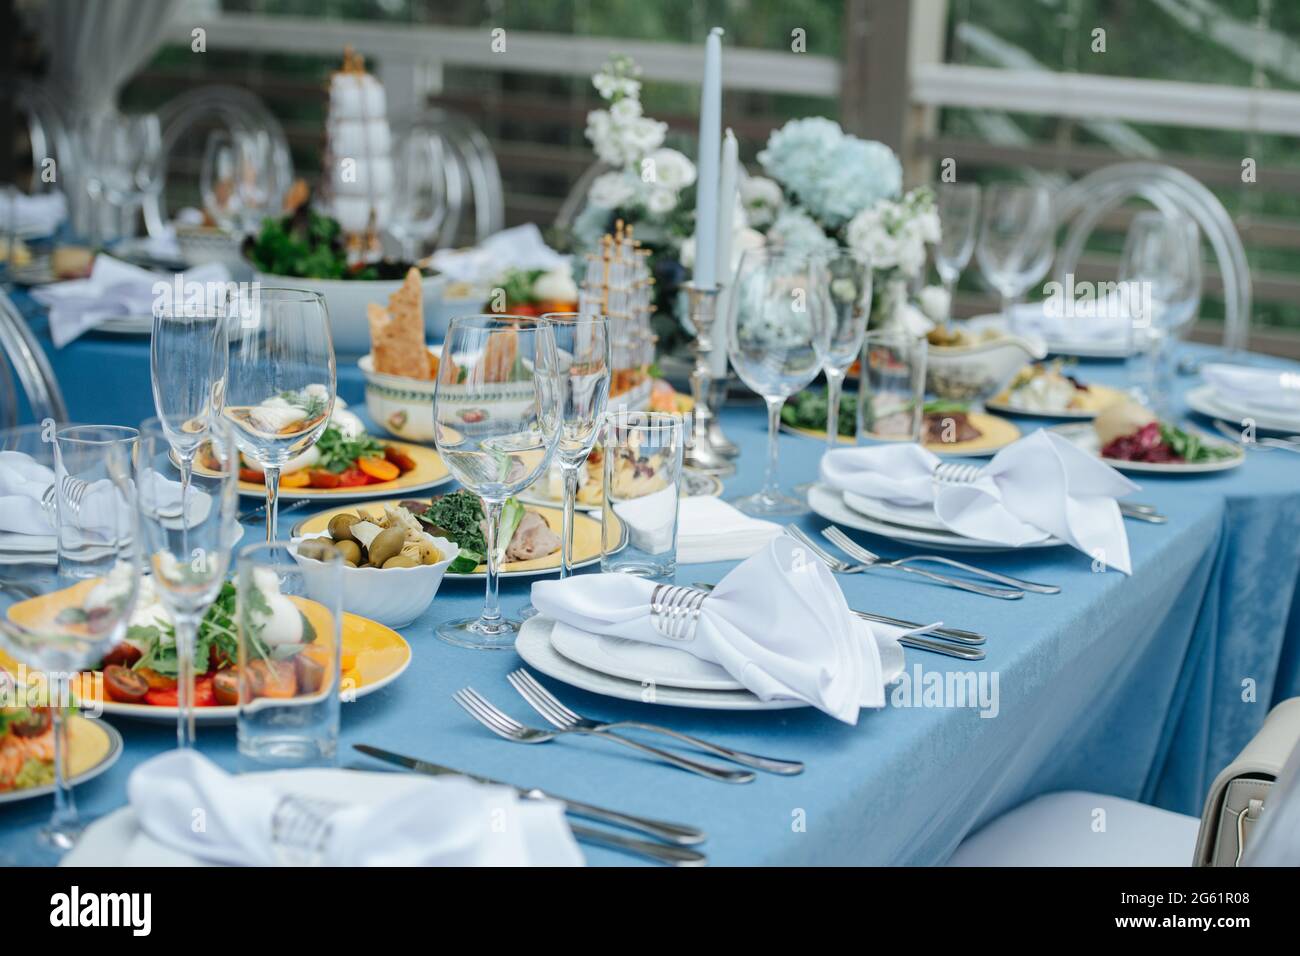 Wedding Linens, Plates, Cups & Wedding Table Settings